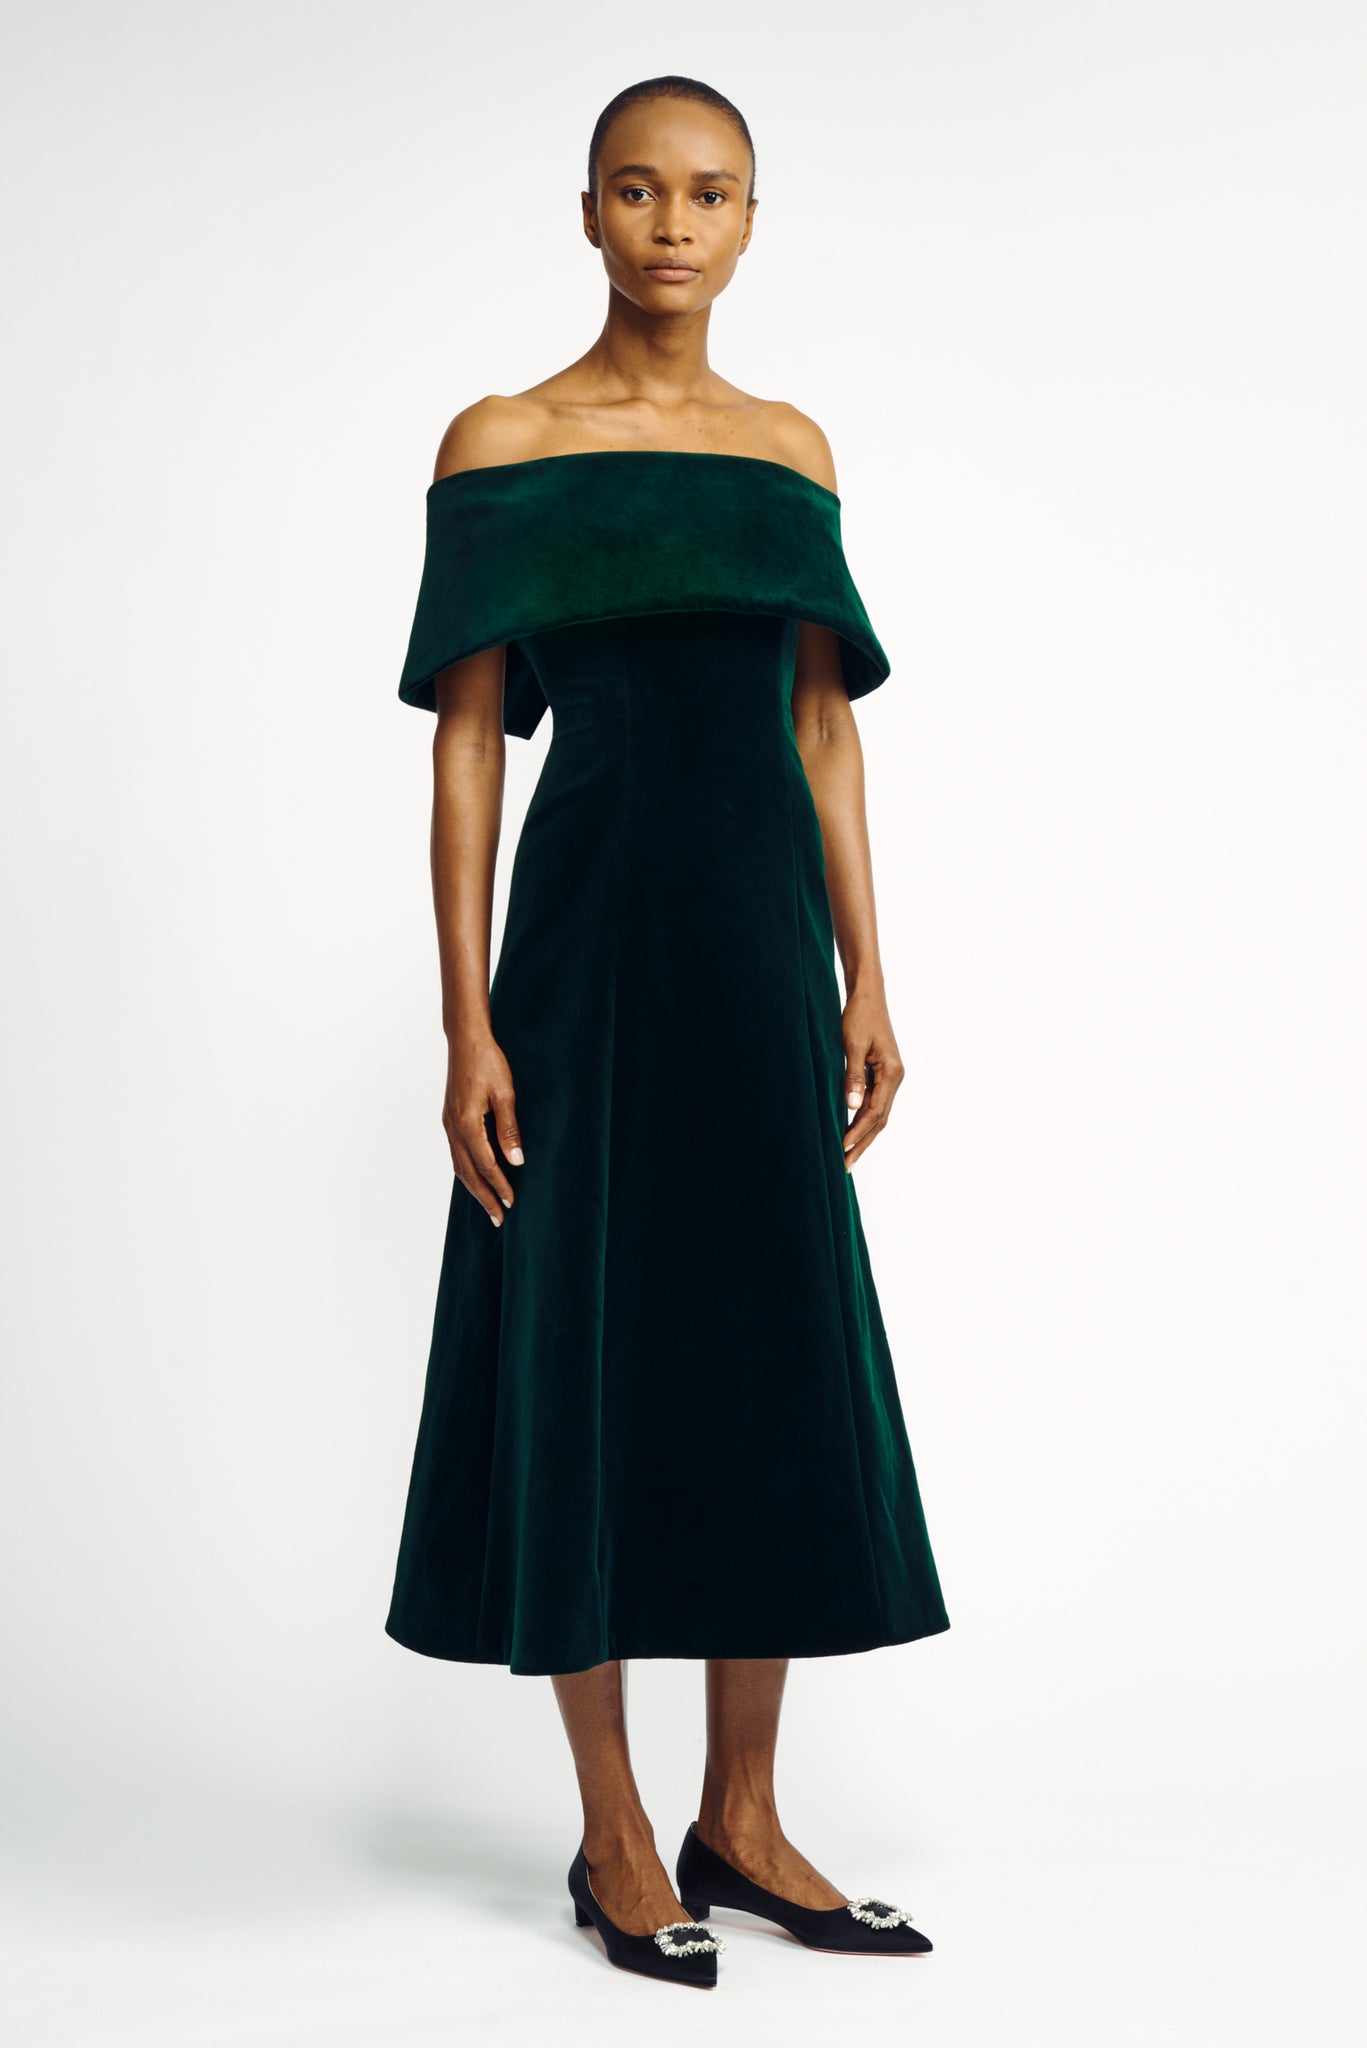 Carita Dress | Green Velvet Off-the-Shoulder Midi Dress | Emilia Wickstead